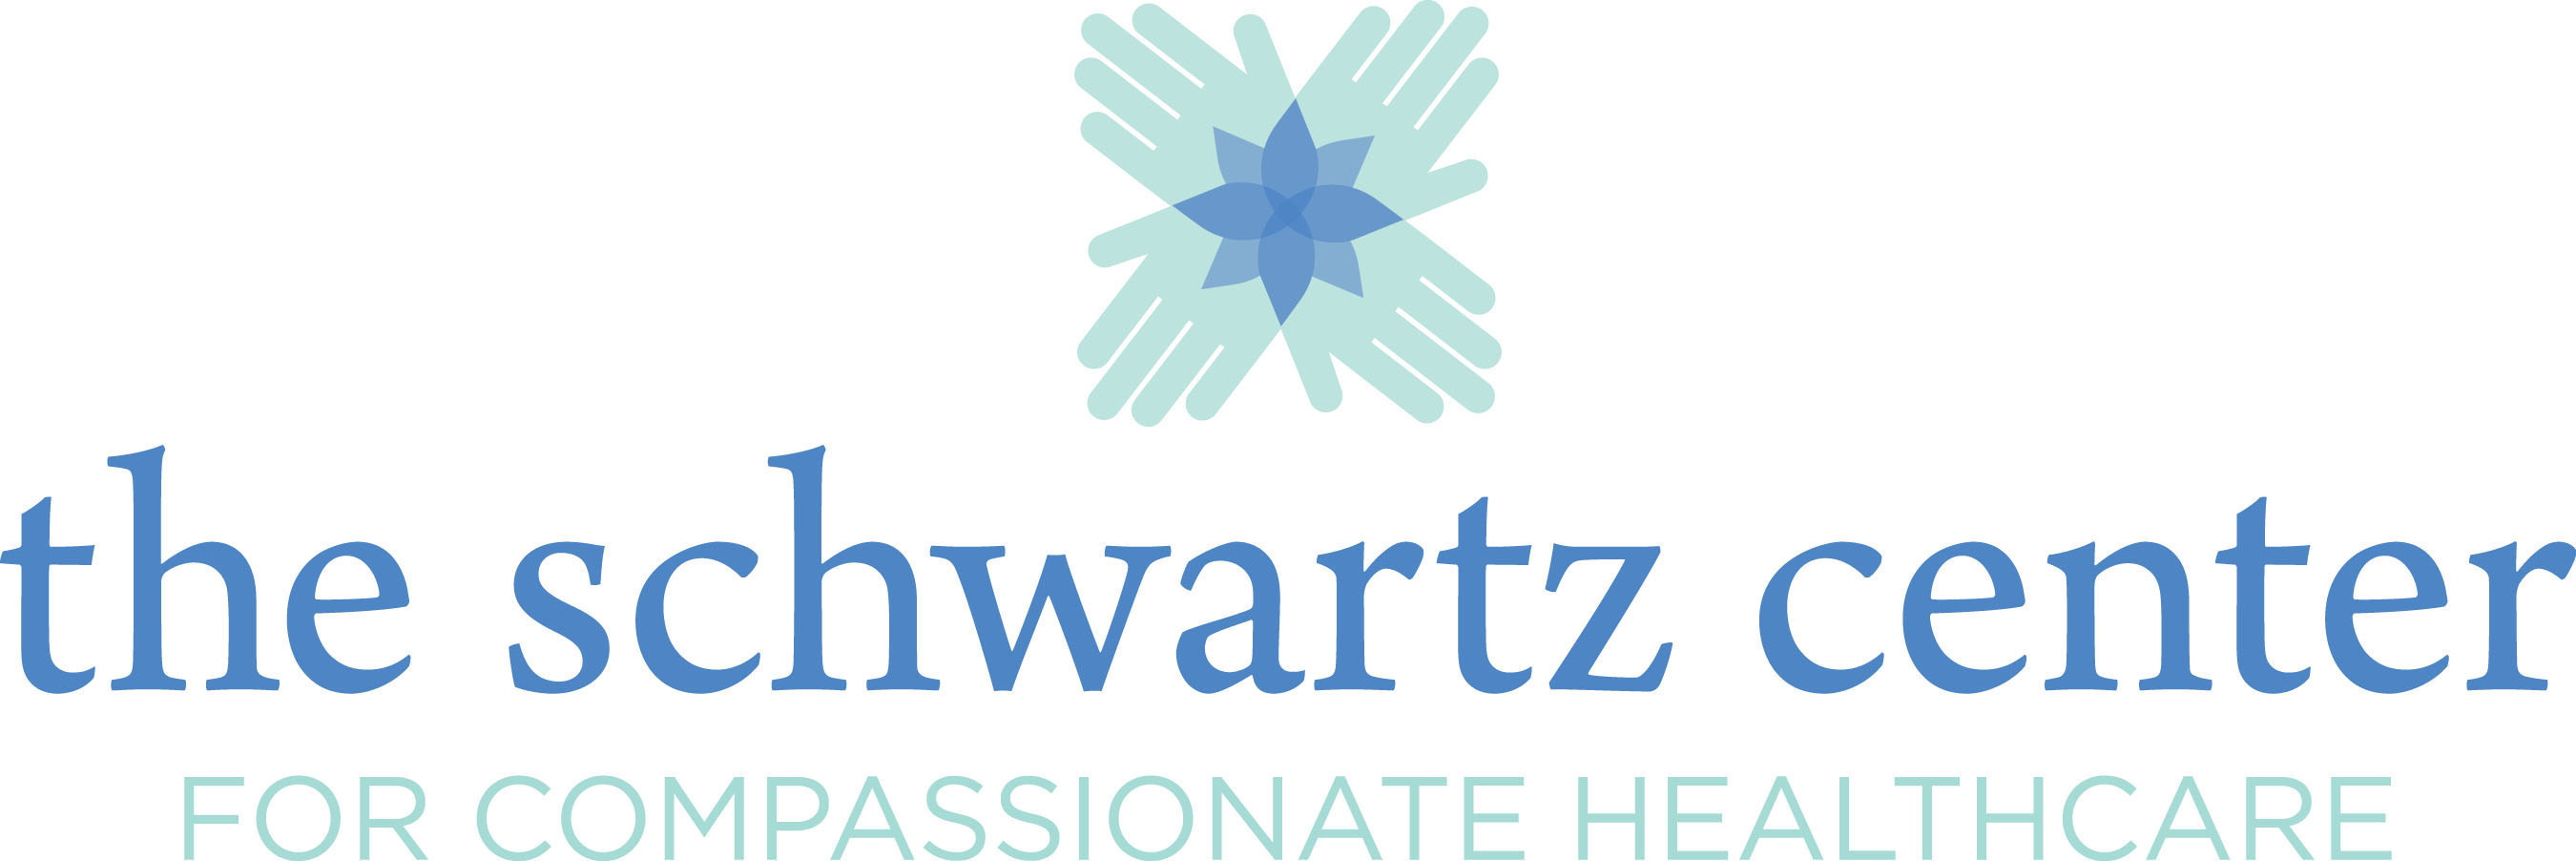 The Schwartz Center for Compassionate Healthcare